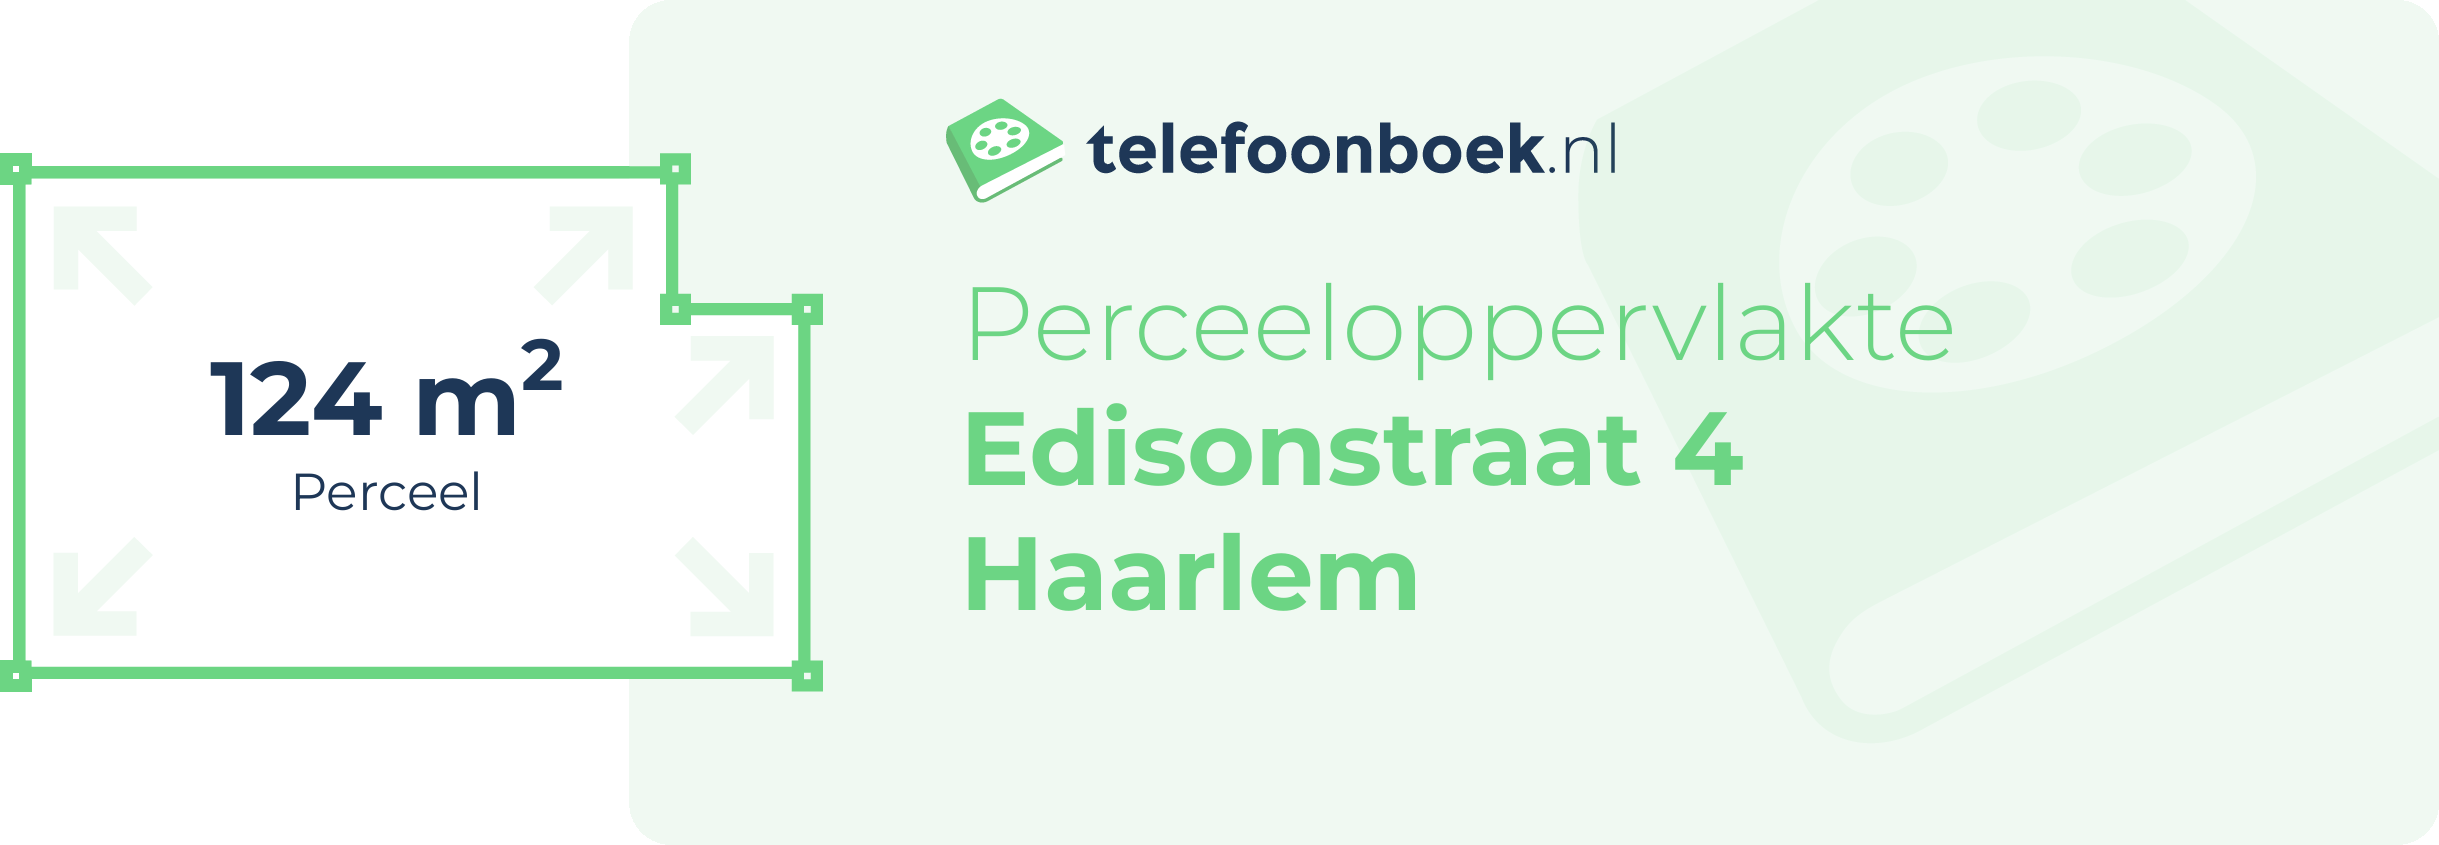 Perceeloppervlakte Edisonstraat 4 Haarlem